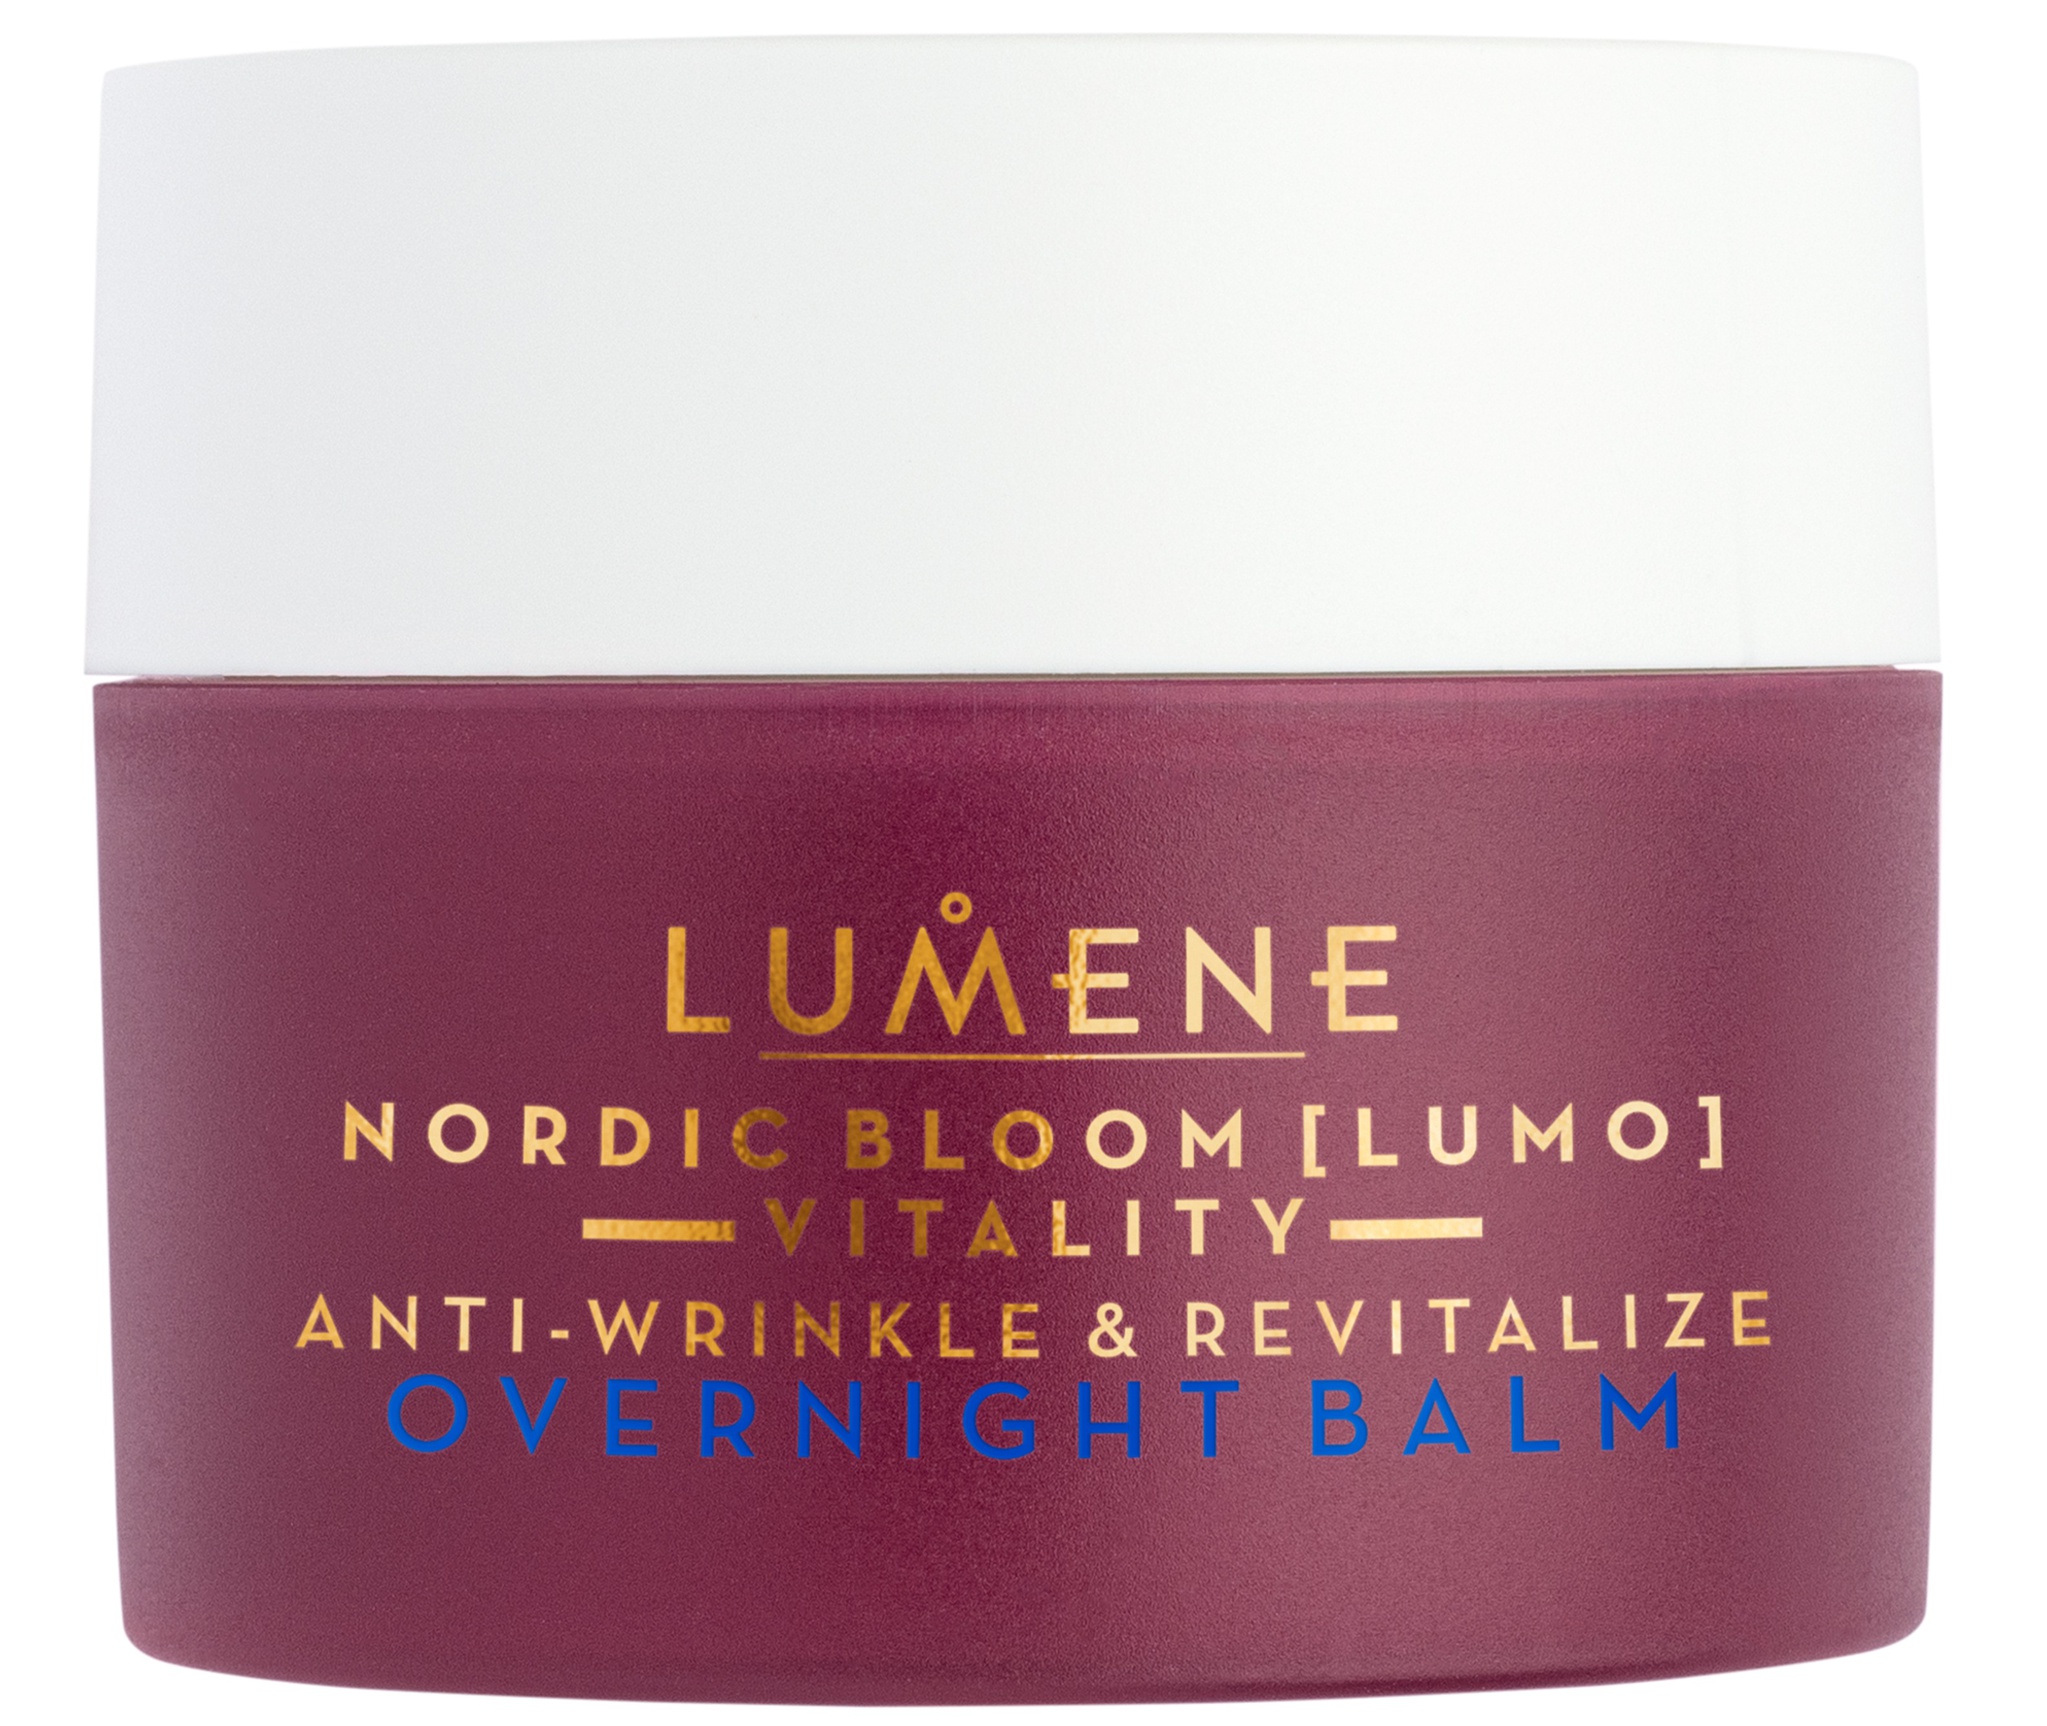 Lumene Nordic Bloom [Lumo] Vitality Anti-Wrinkle & Revitalize Overnight Balm